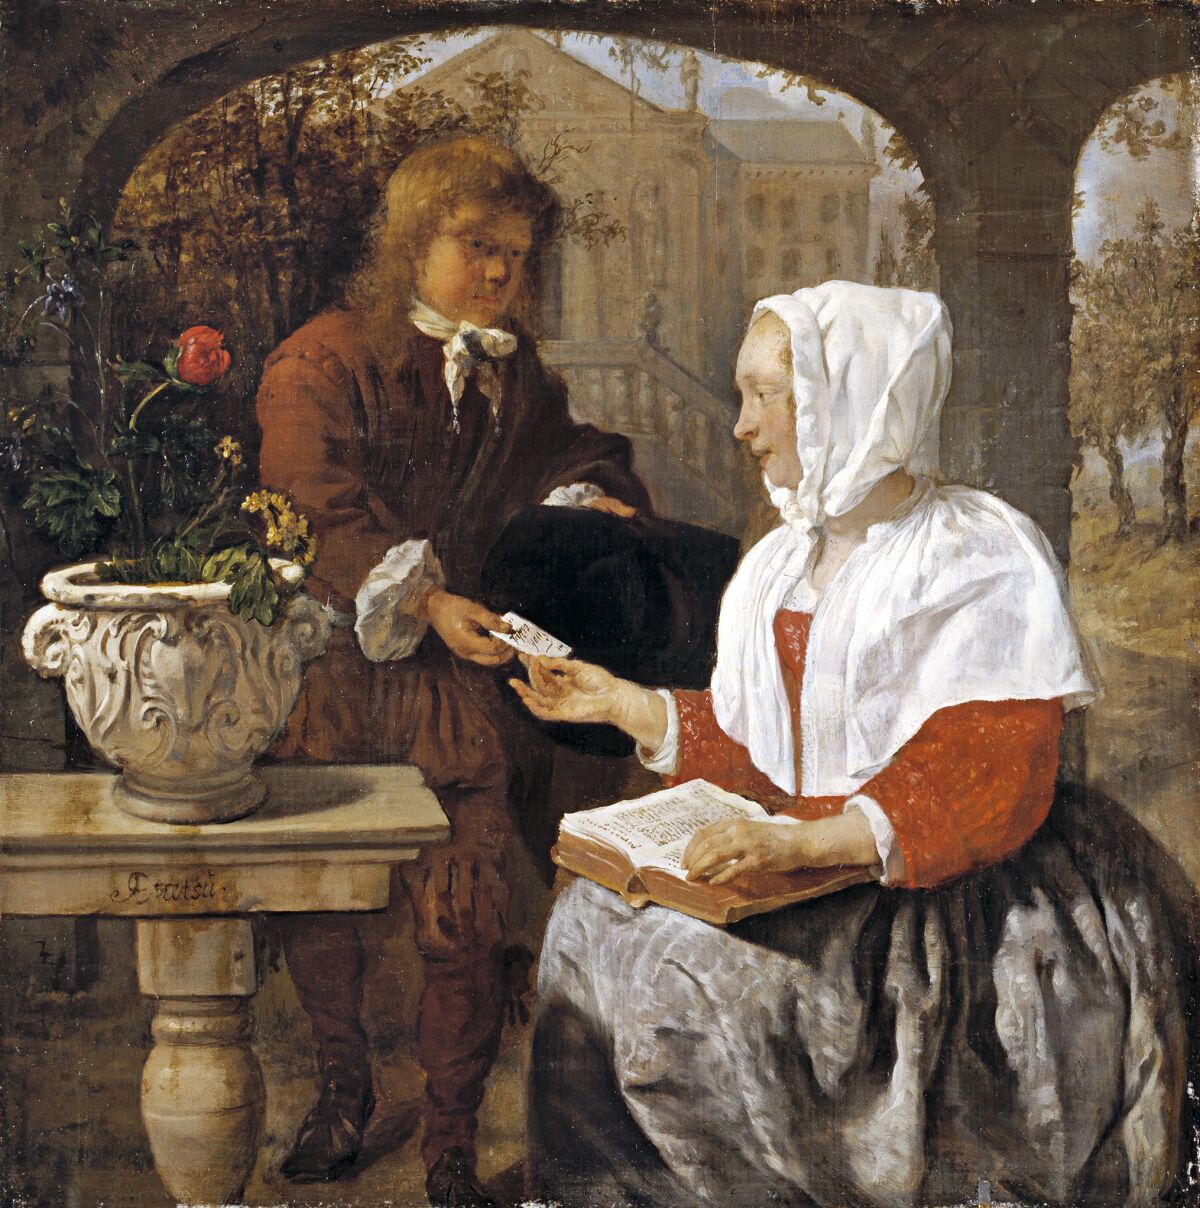 Gabriel Metsu: "Girl Receiving a Letter" (c. 1658)